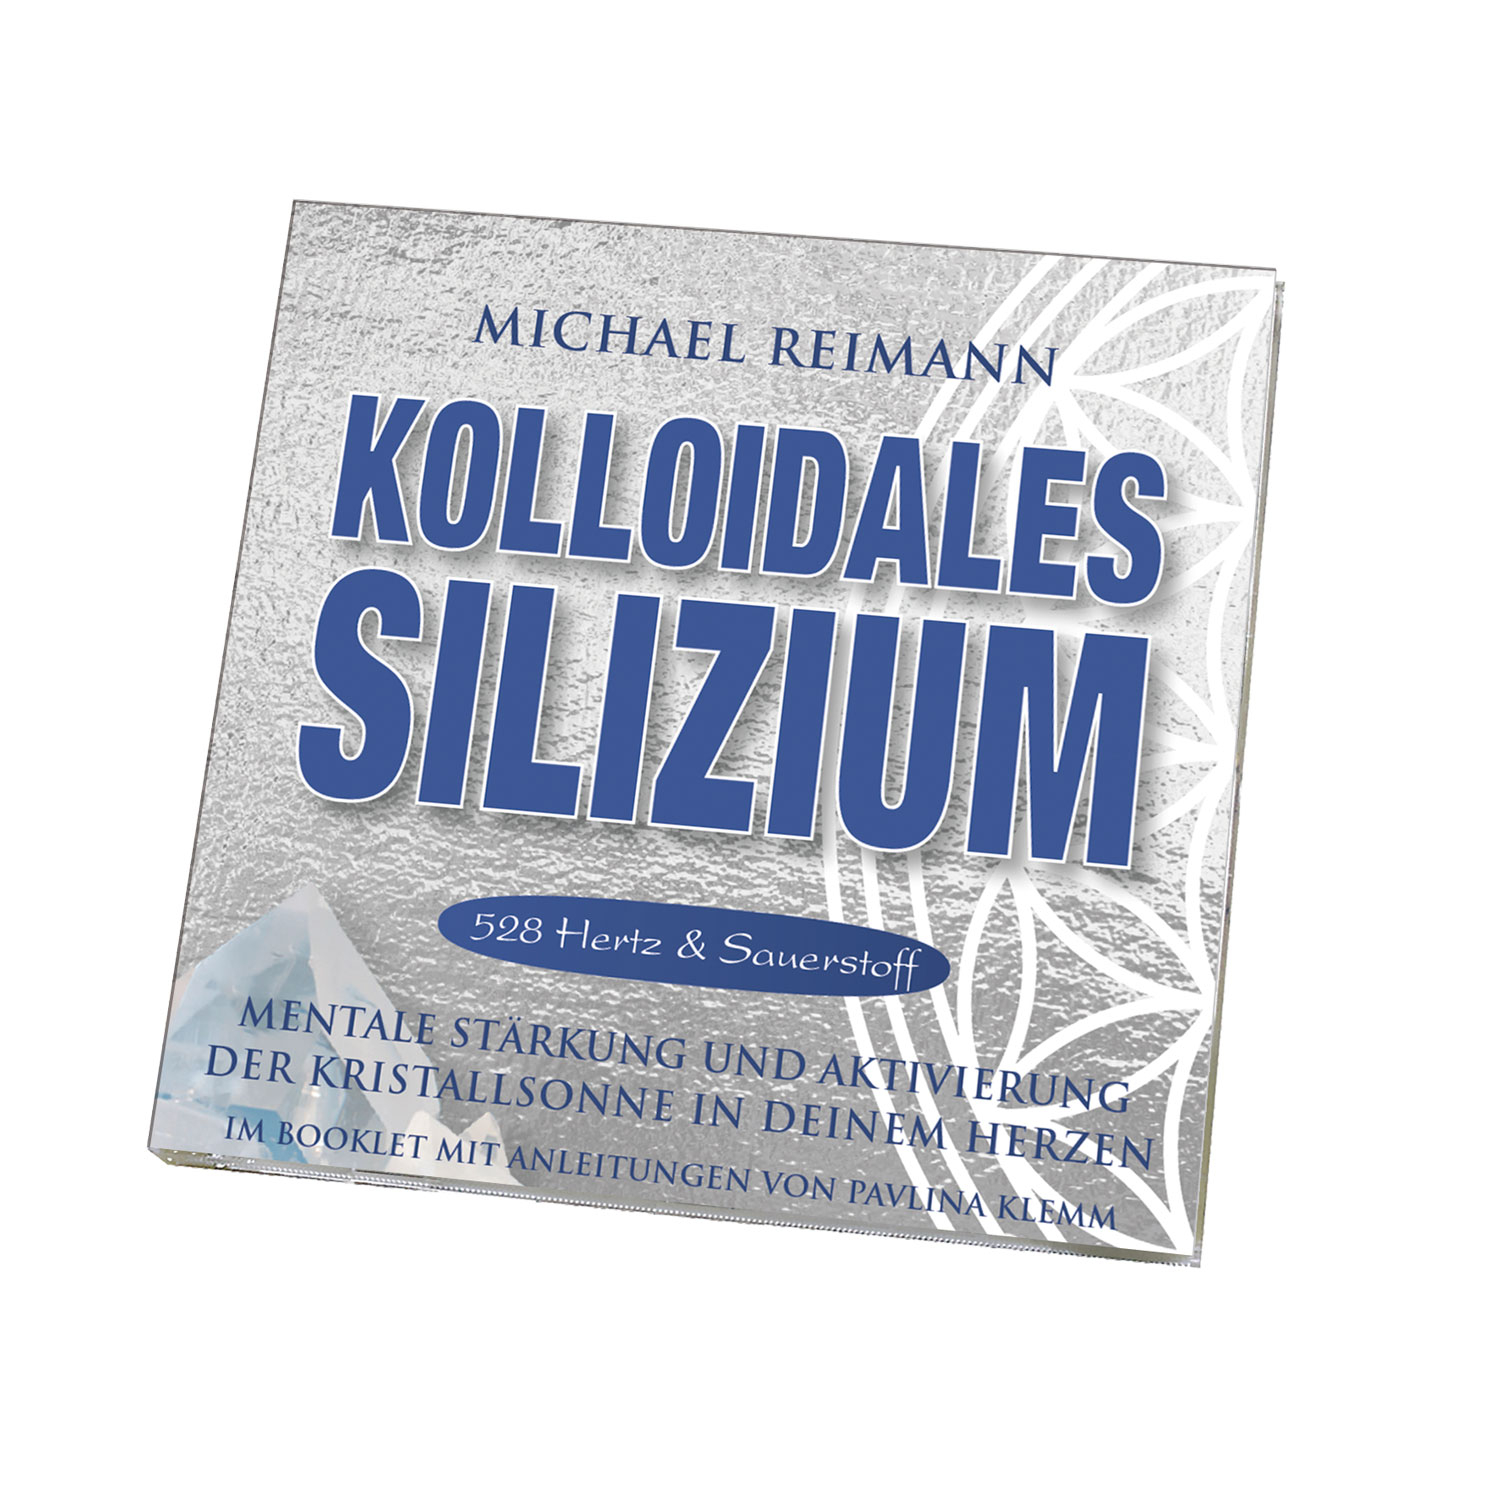 Kolloidales Silizium (CD), Produktbild 1